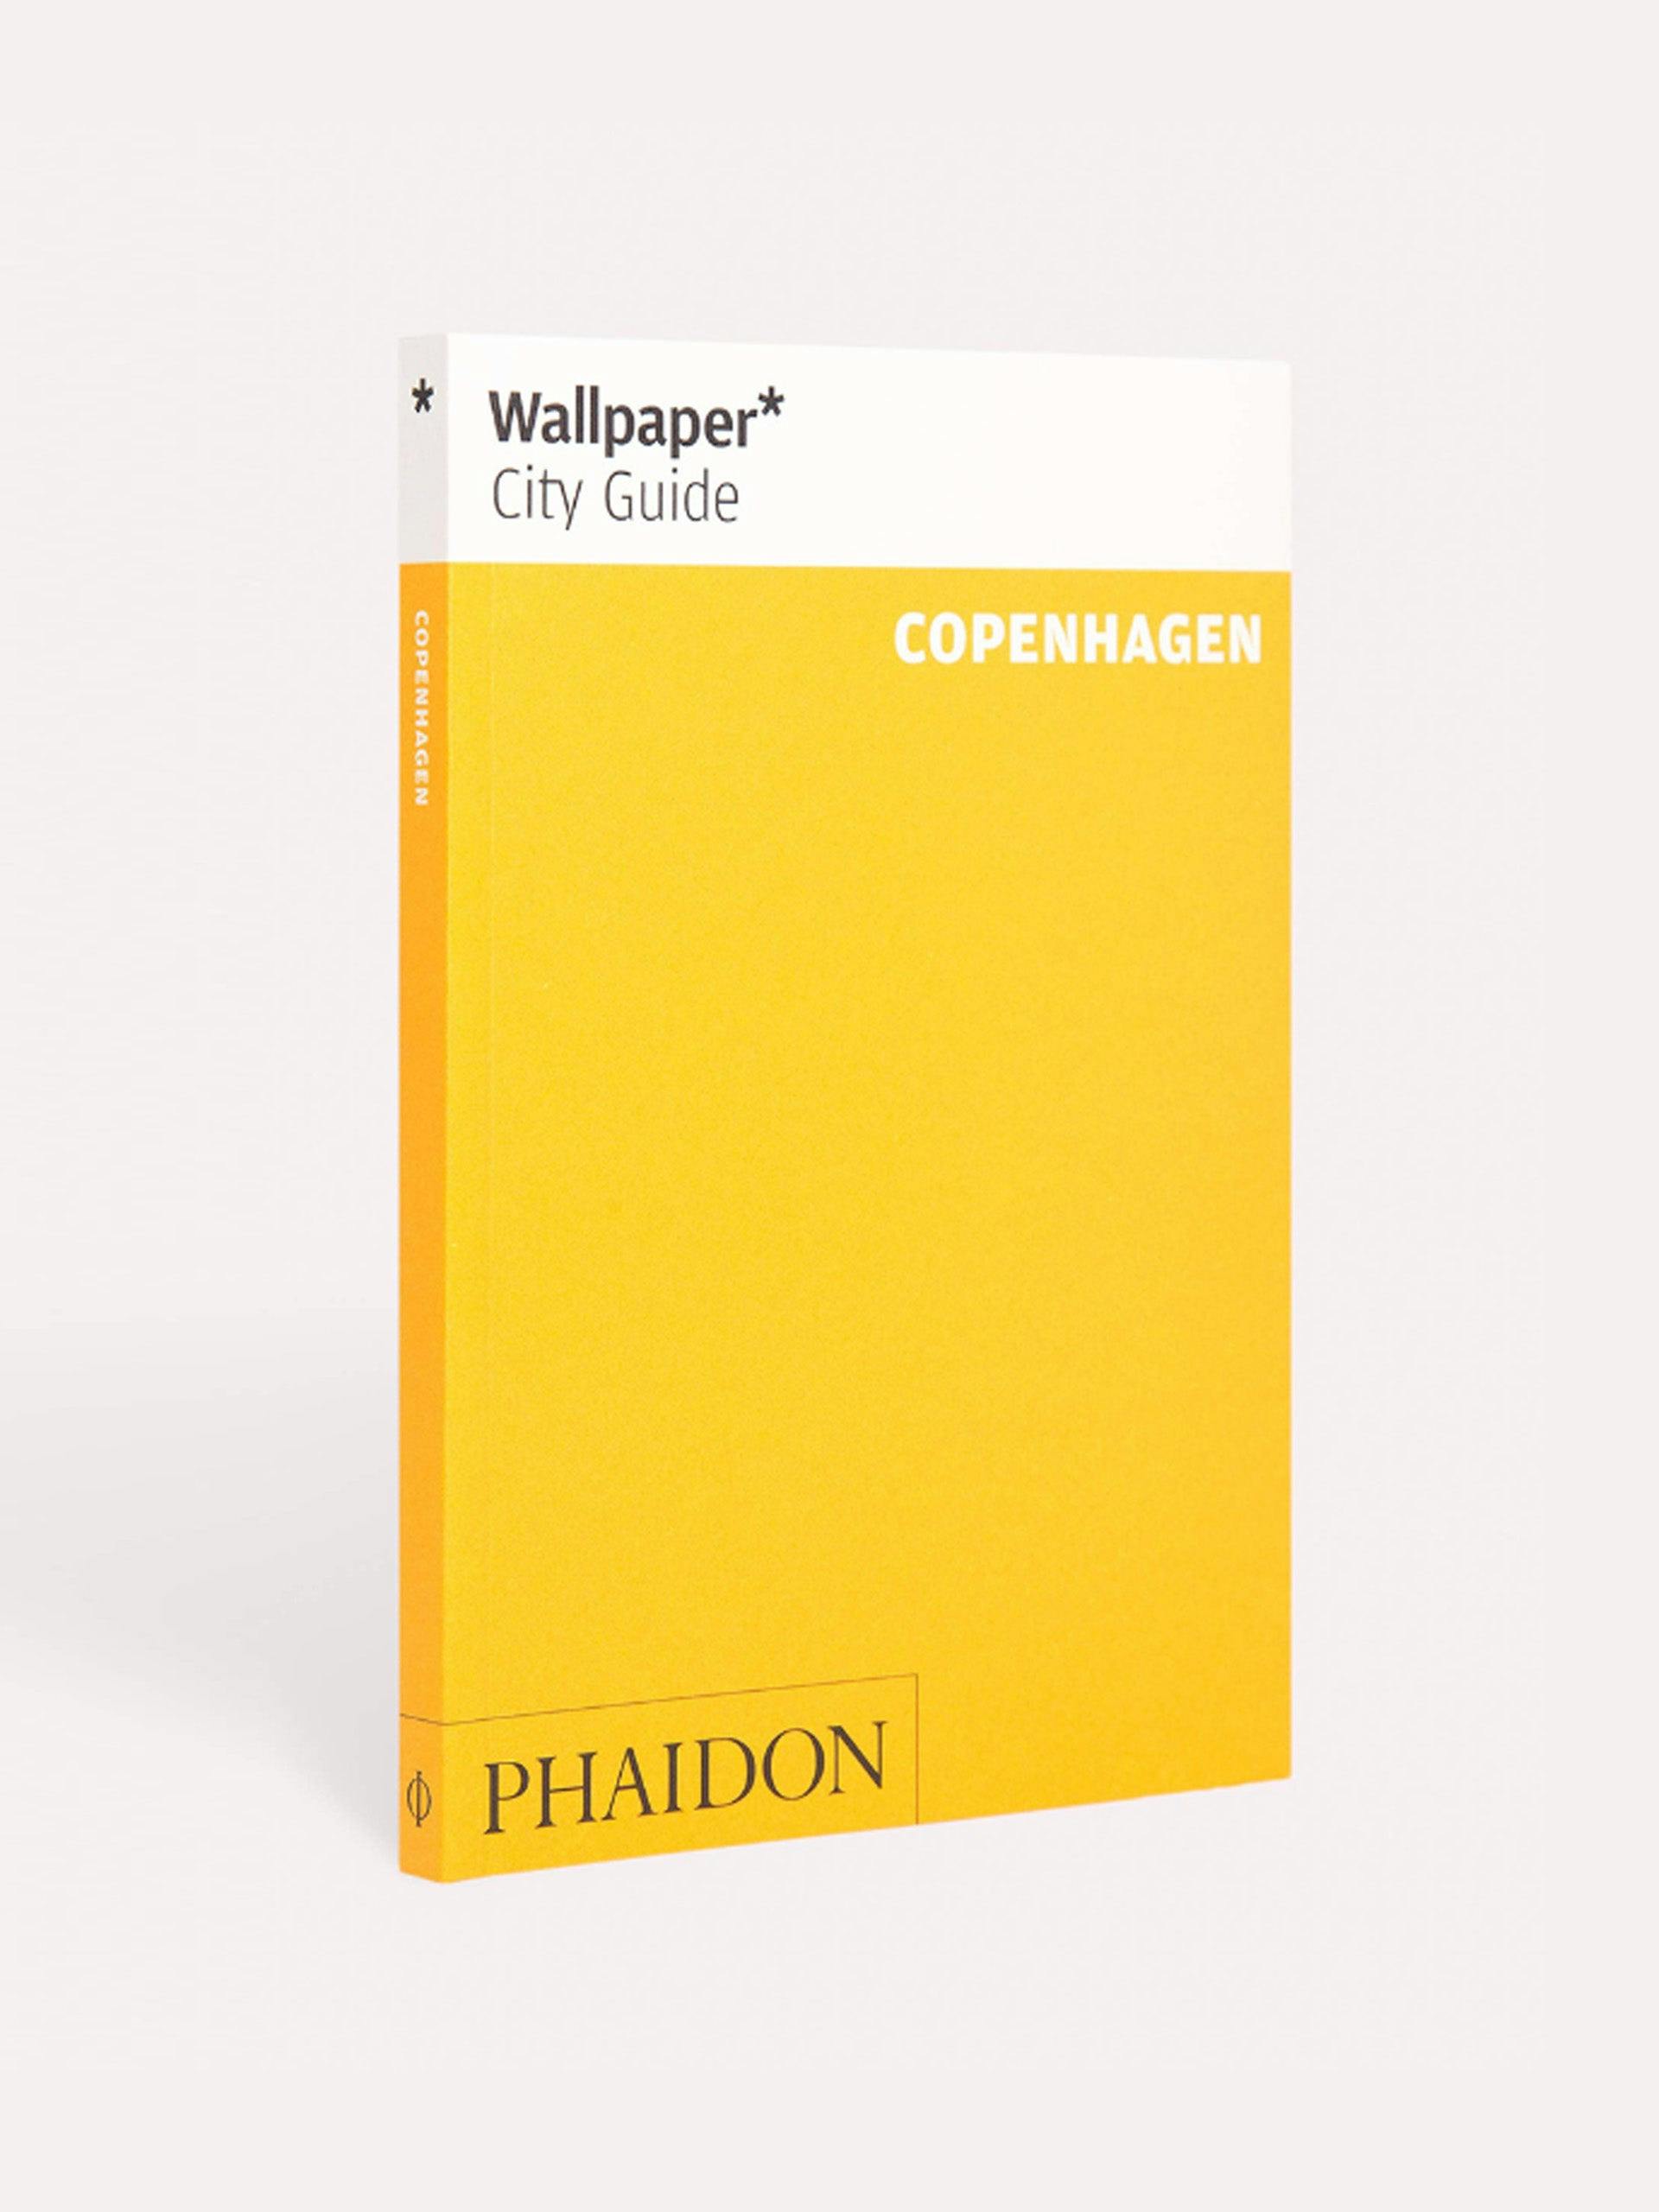 Wallpaper* City Guide: Copenhagen